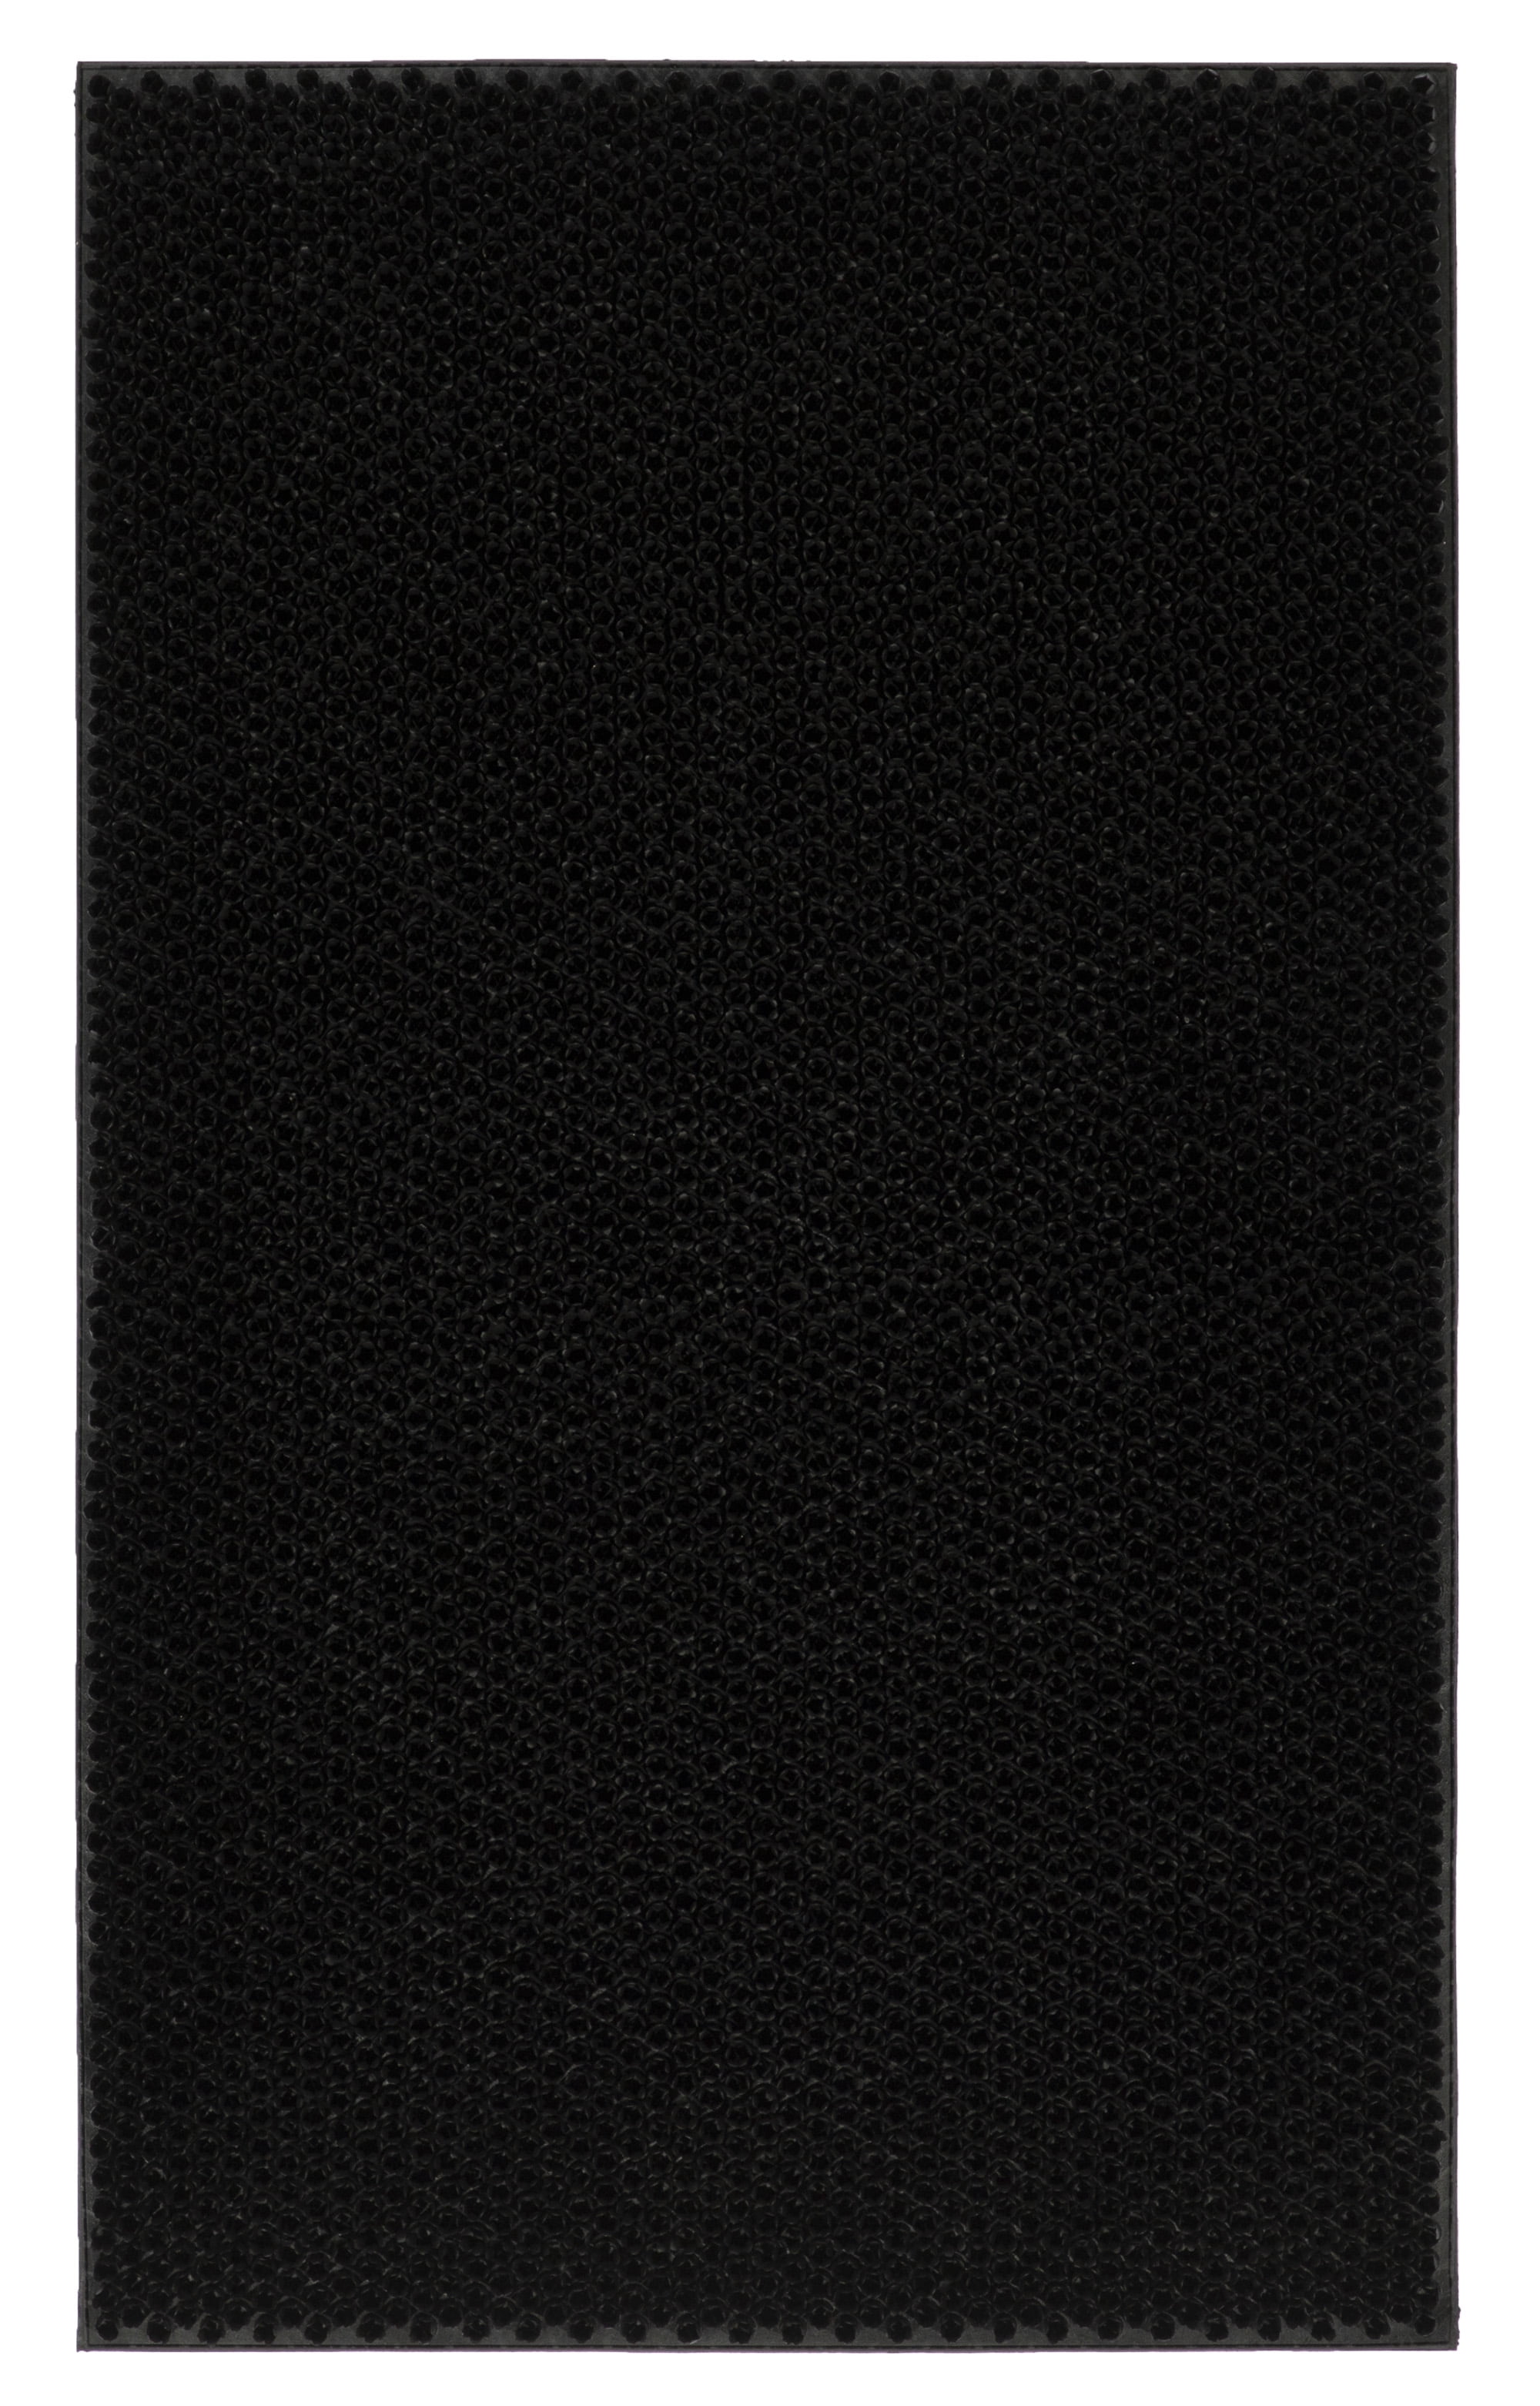 Ottomanson Rubber Doormat Collection Black Slice 18 in. x 30 in. Rubber Door  Mat RDM9500-18X30 - The Home Depot